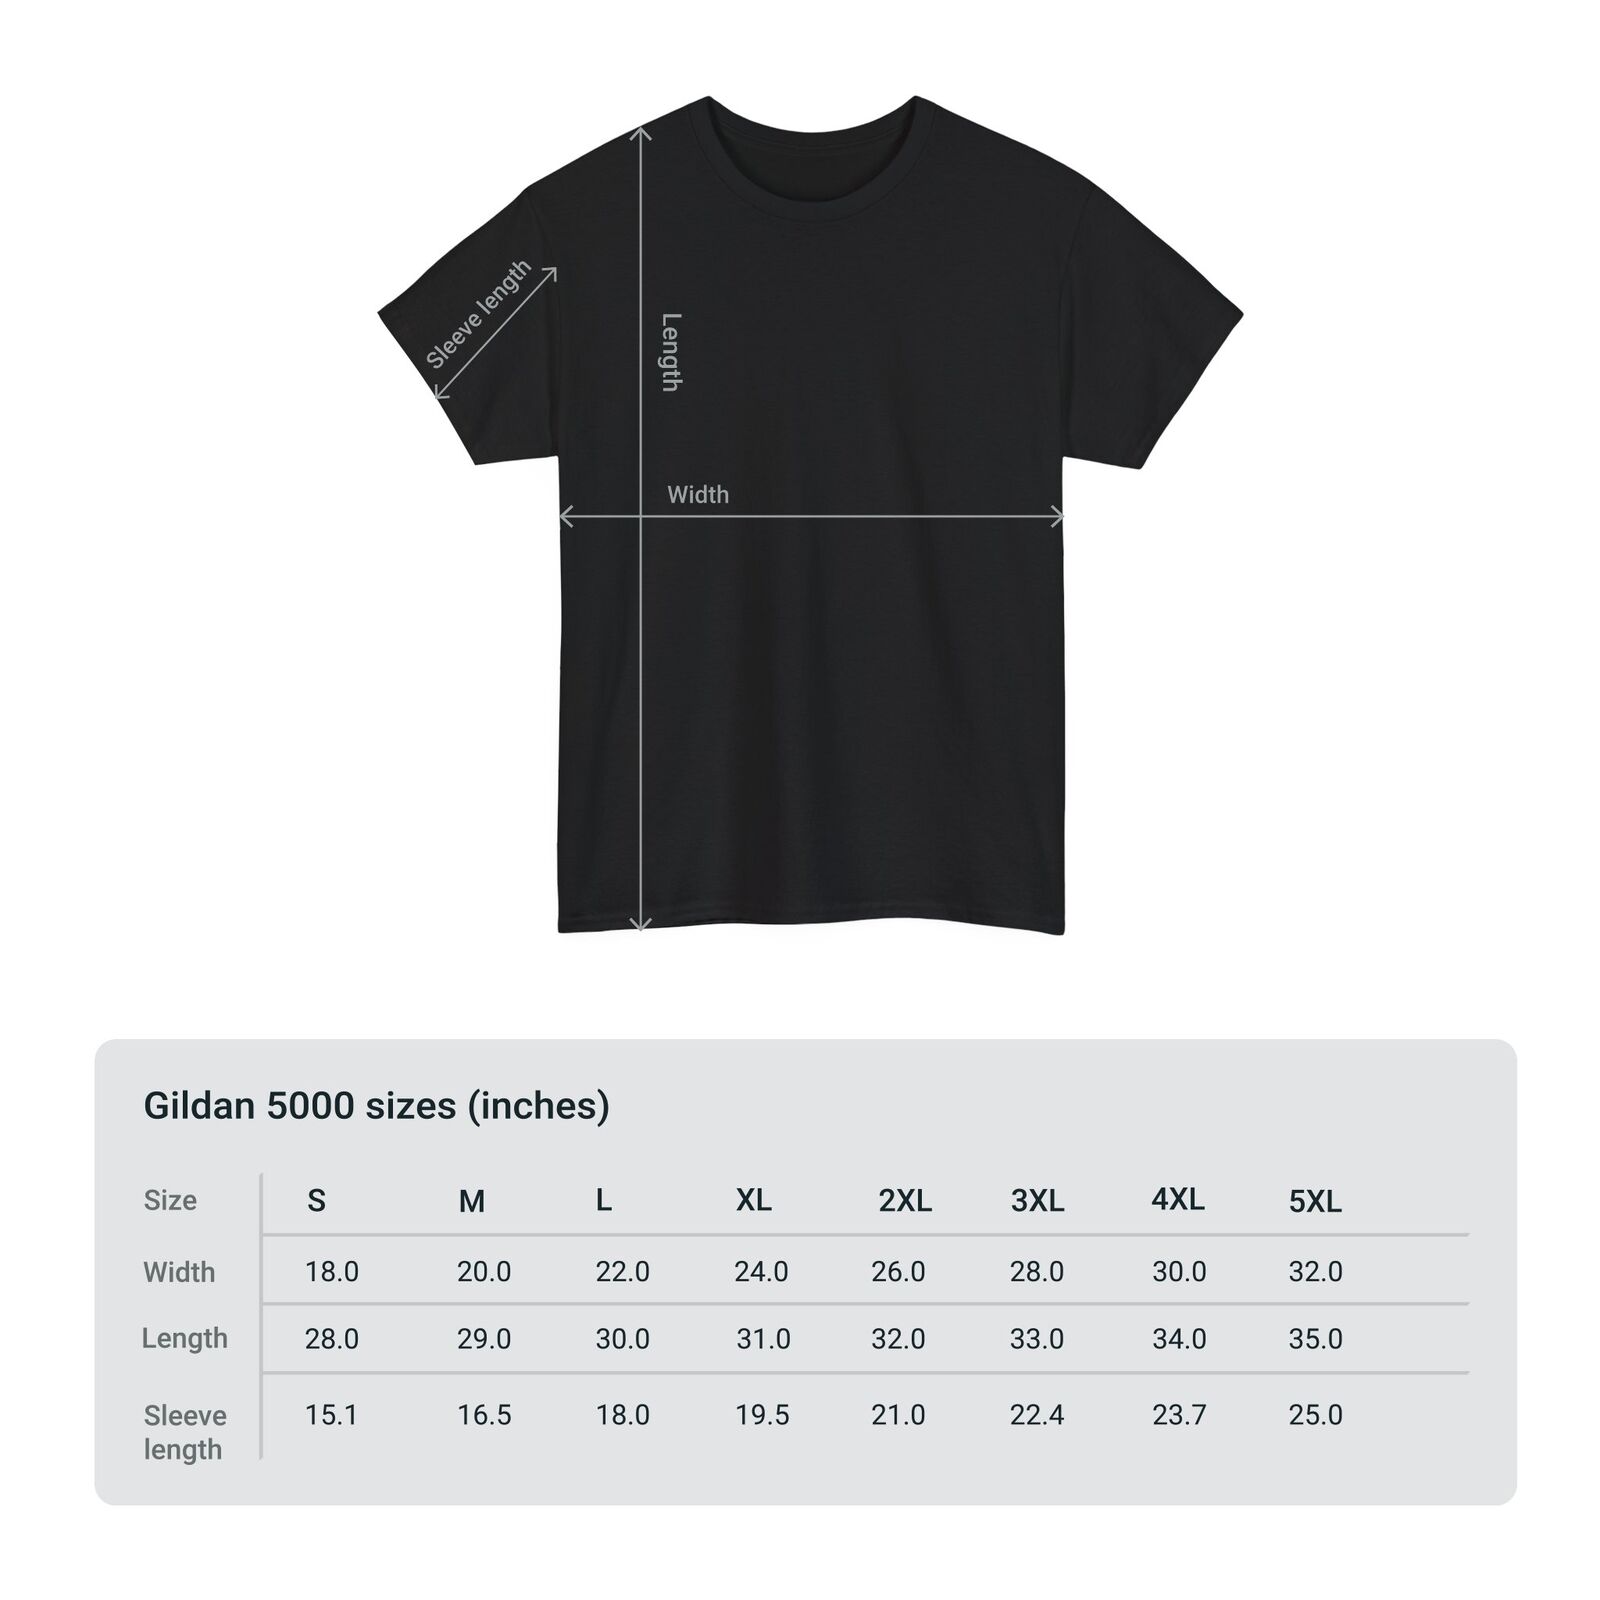 Saint Laurent inspired condom T-Shirt in Black, thrift store aesthetic vintage t